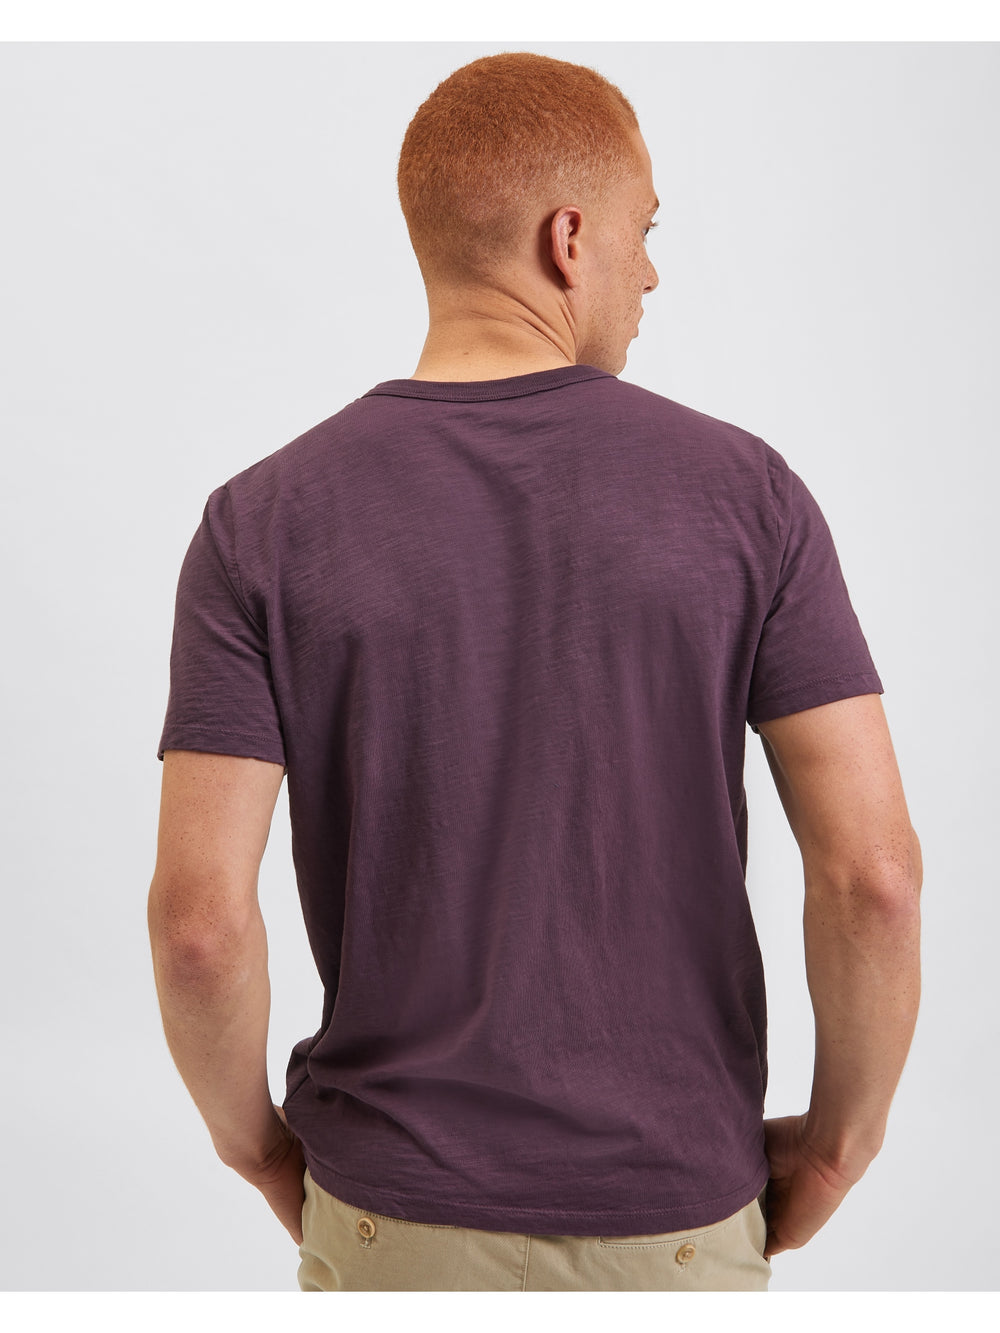 Garment Dye Beatnik Short-Sleeve T-Shirt - Merlot